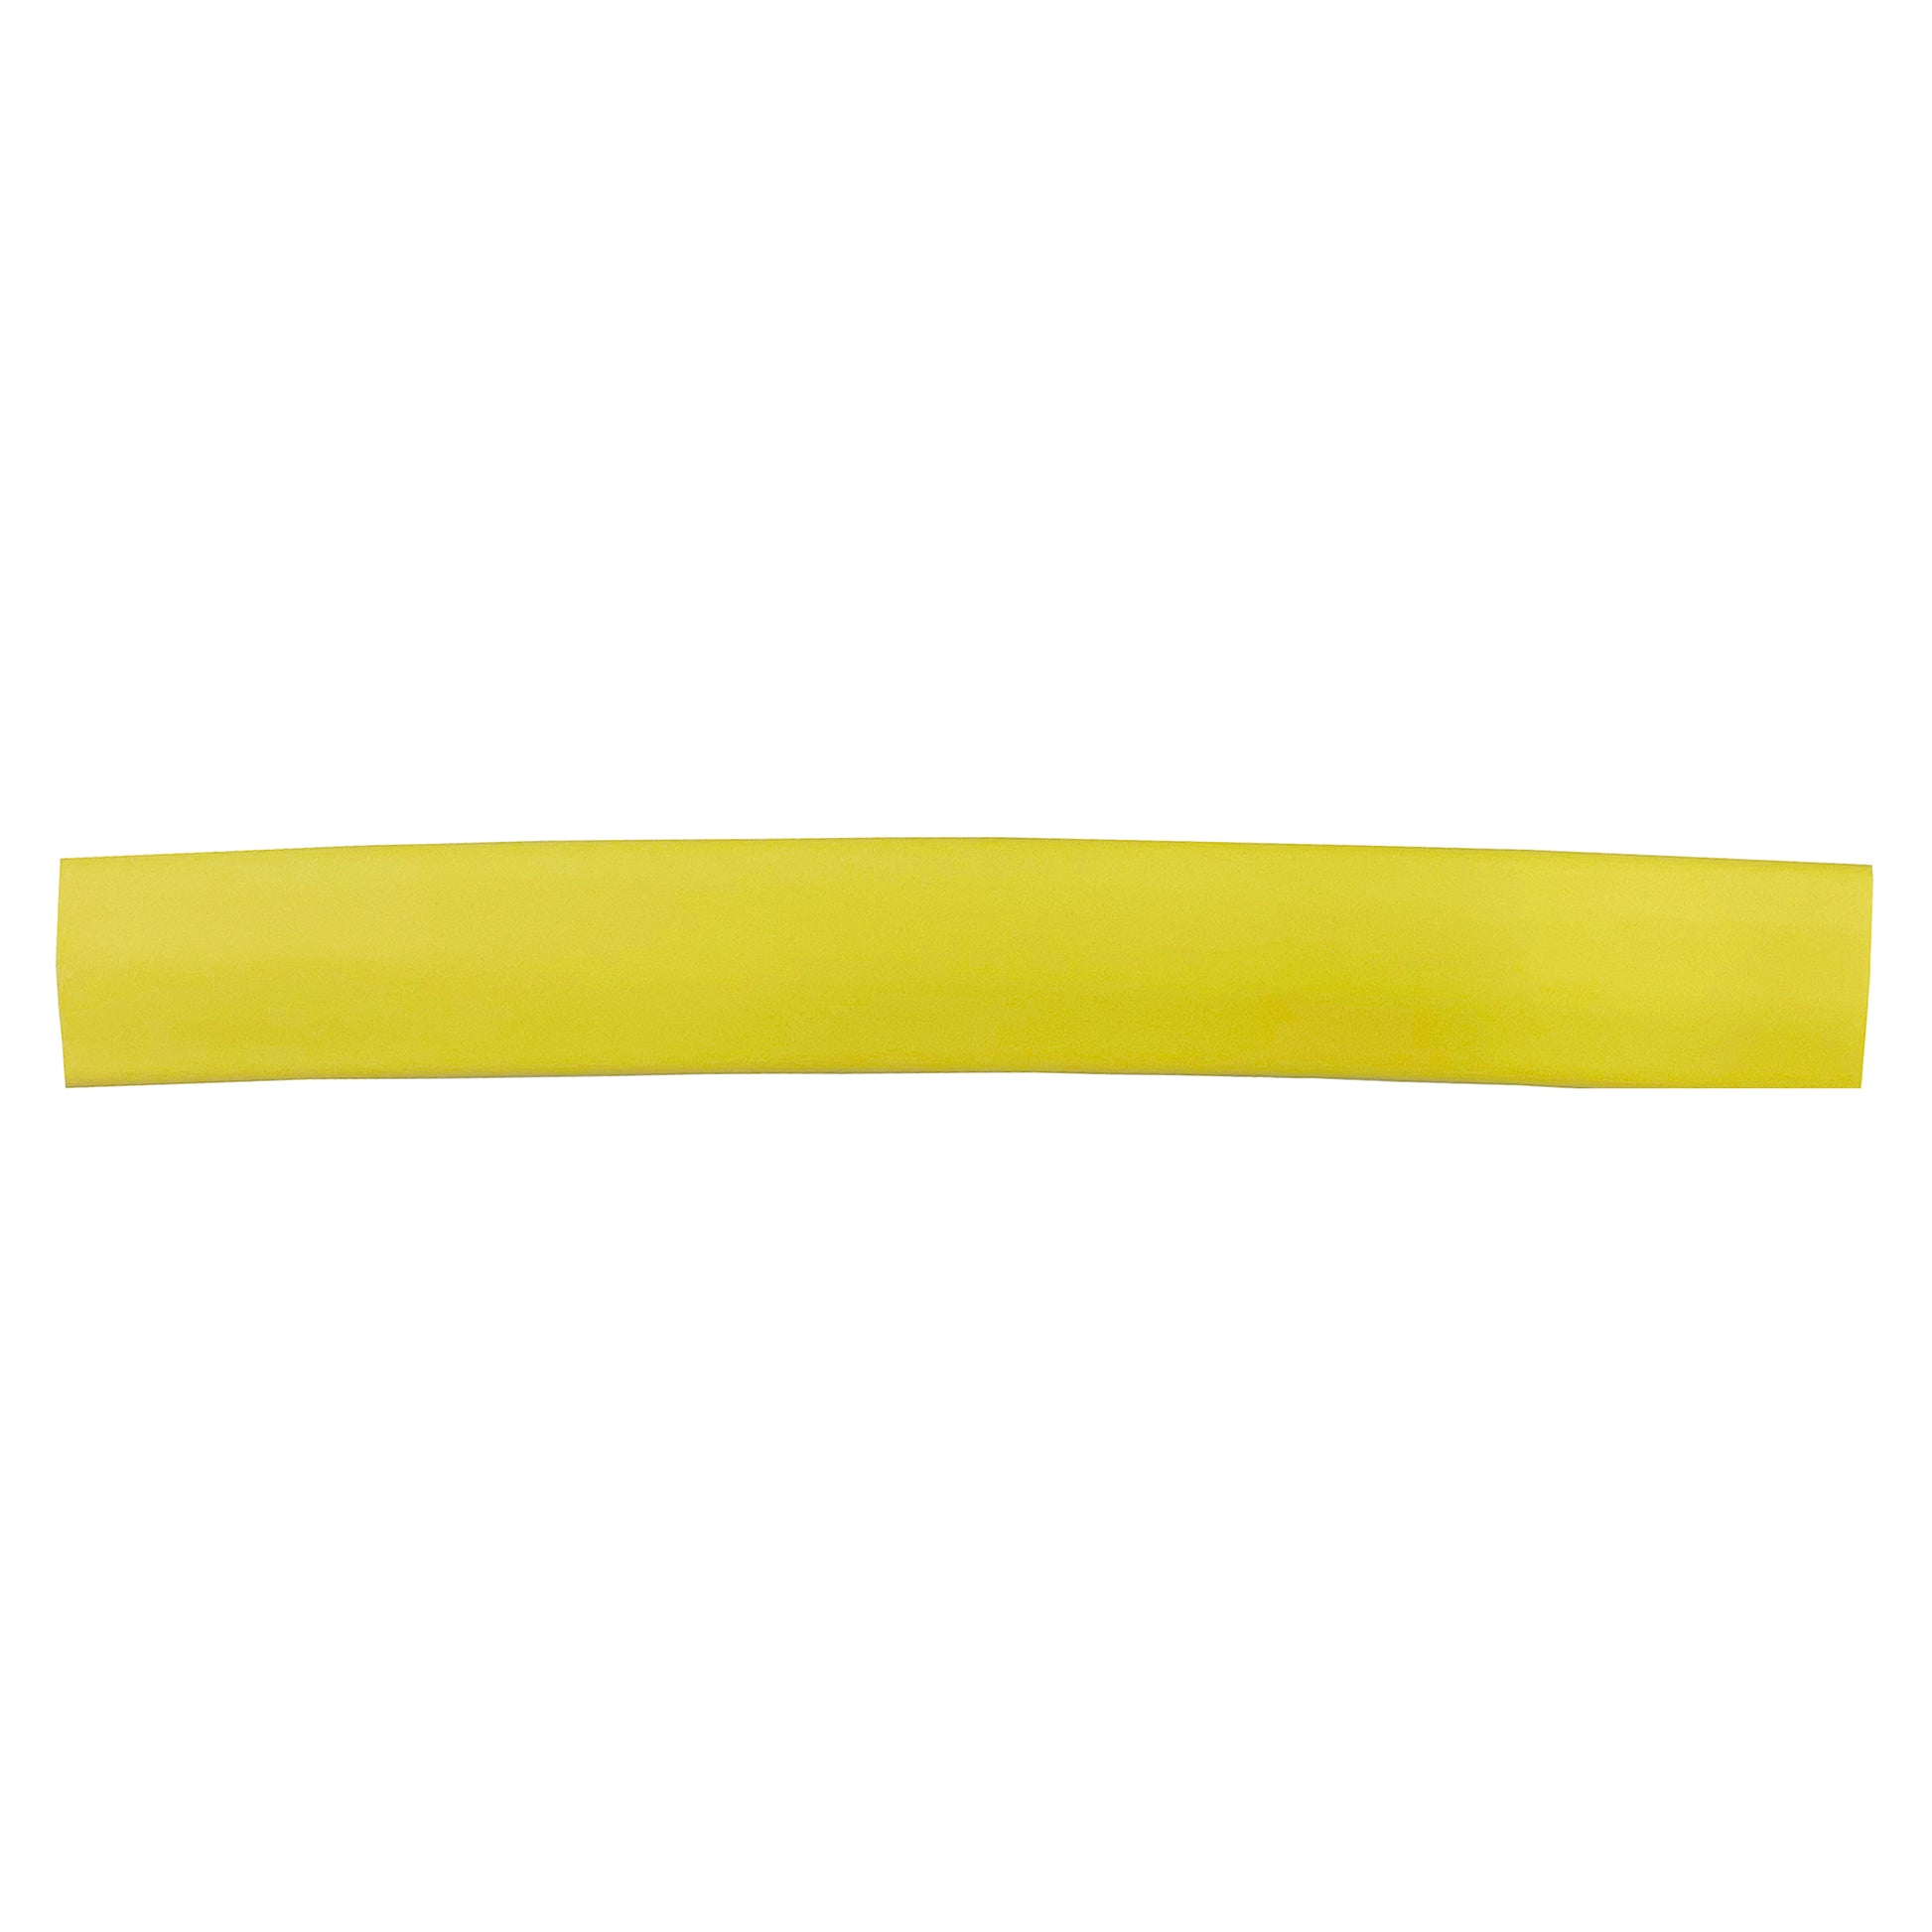 Flexible Thin Single Wall Non-Adhesive Heat Shrink Tubing 2:1 Yellow 1/2" ID - 100' Ft Spool